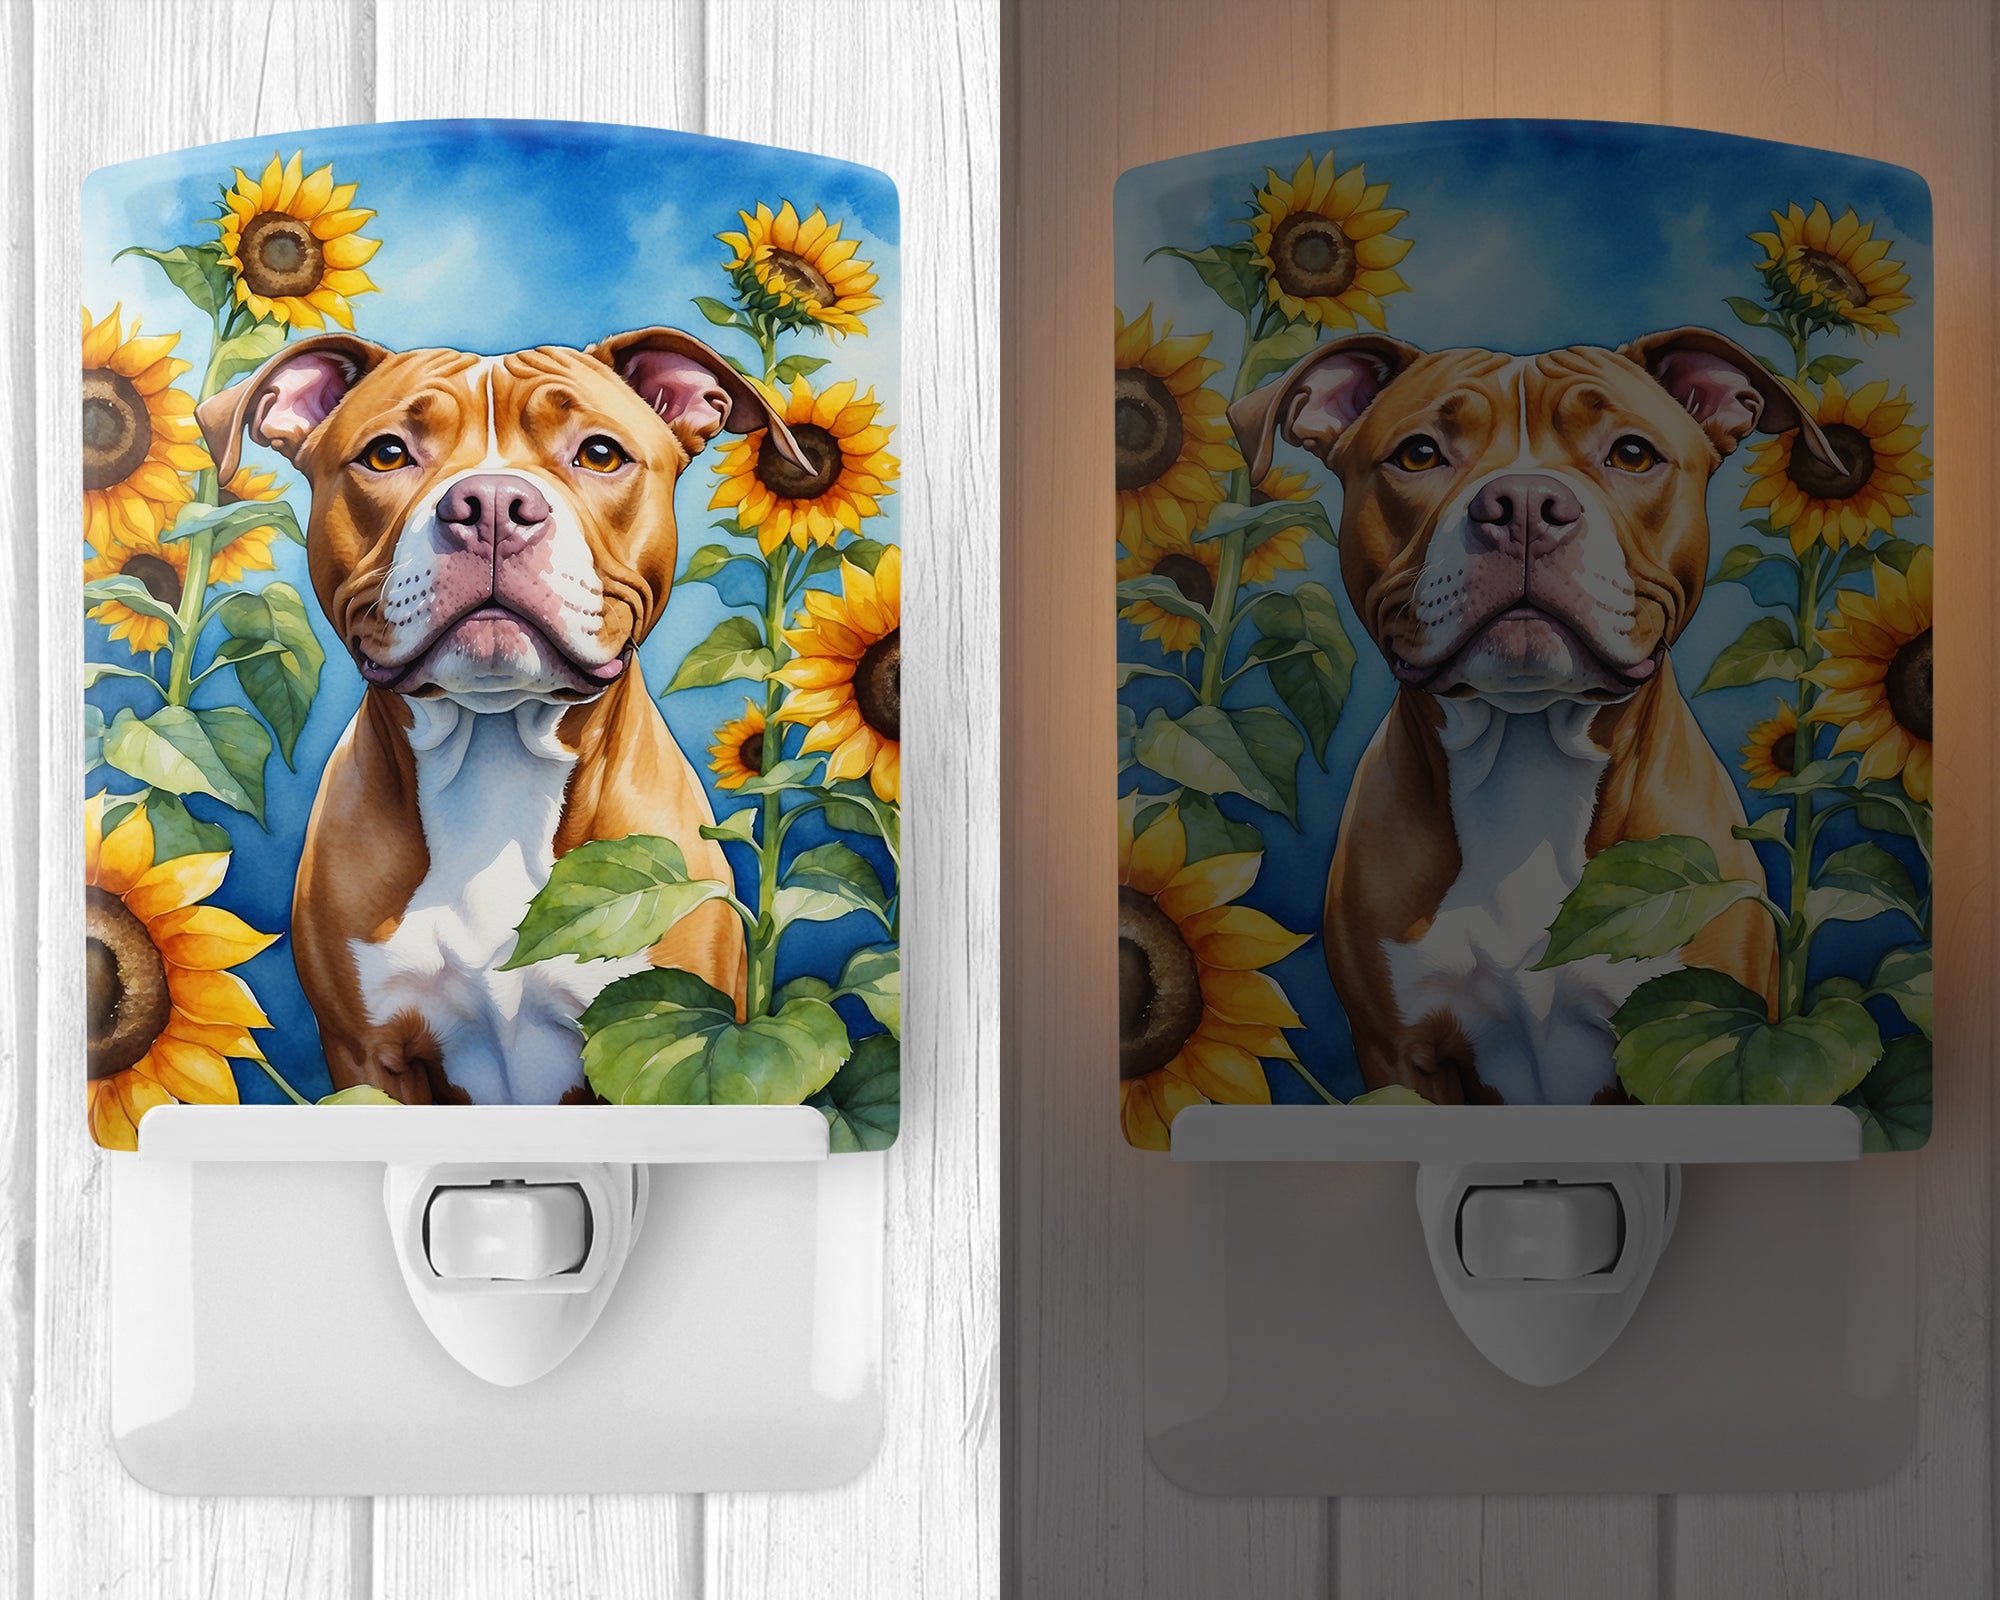 Buy this Pit Bull Terrier in Sunflowers Ceramic Night Light